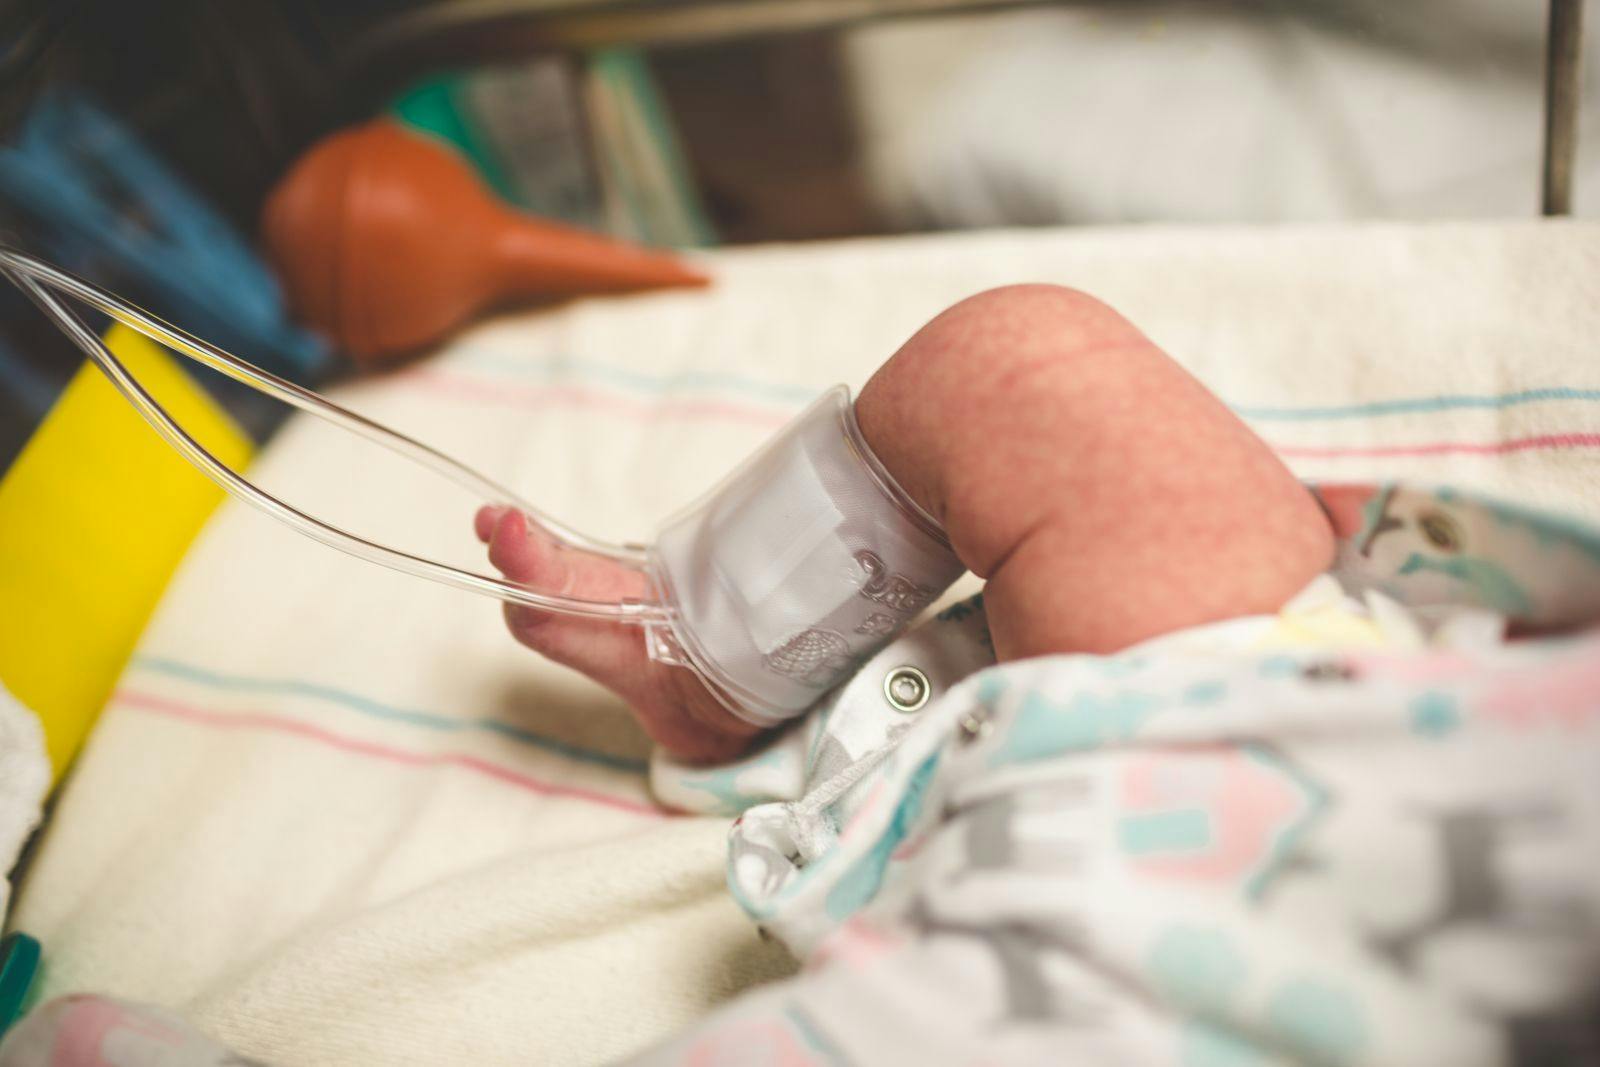 Phase 4 Nusinersen Trial Underway in Infants, Children With Spinal Muscular Atrophy